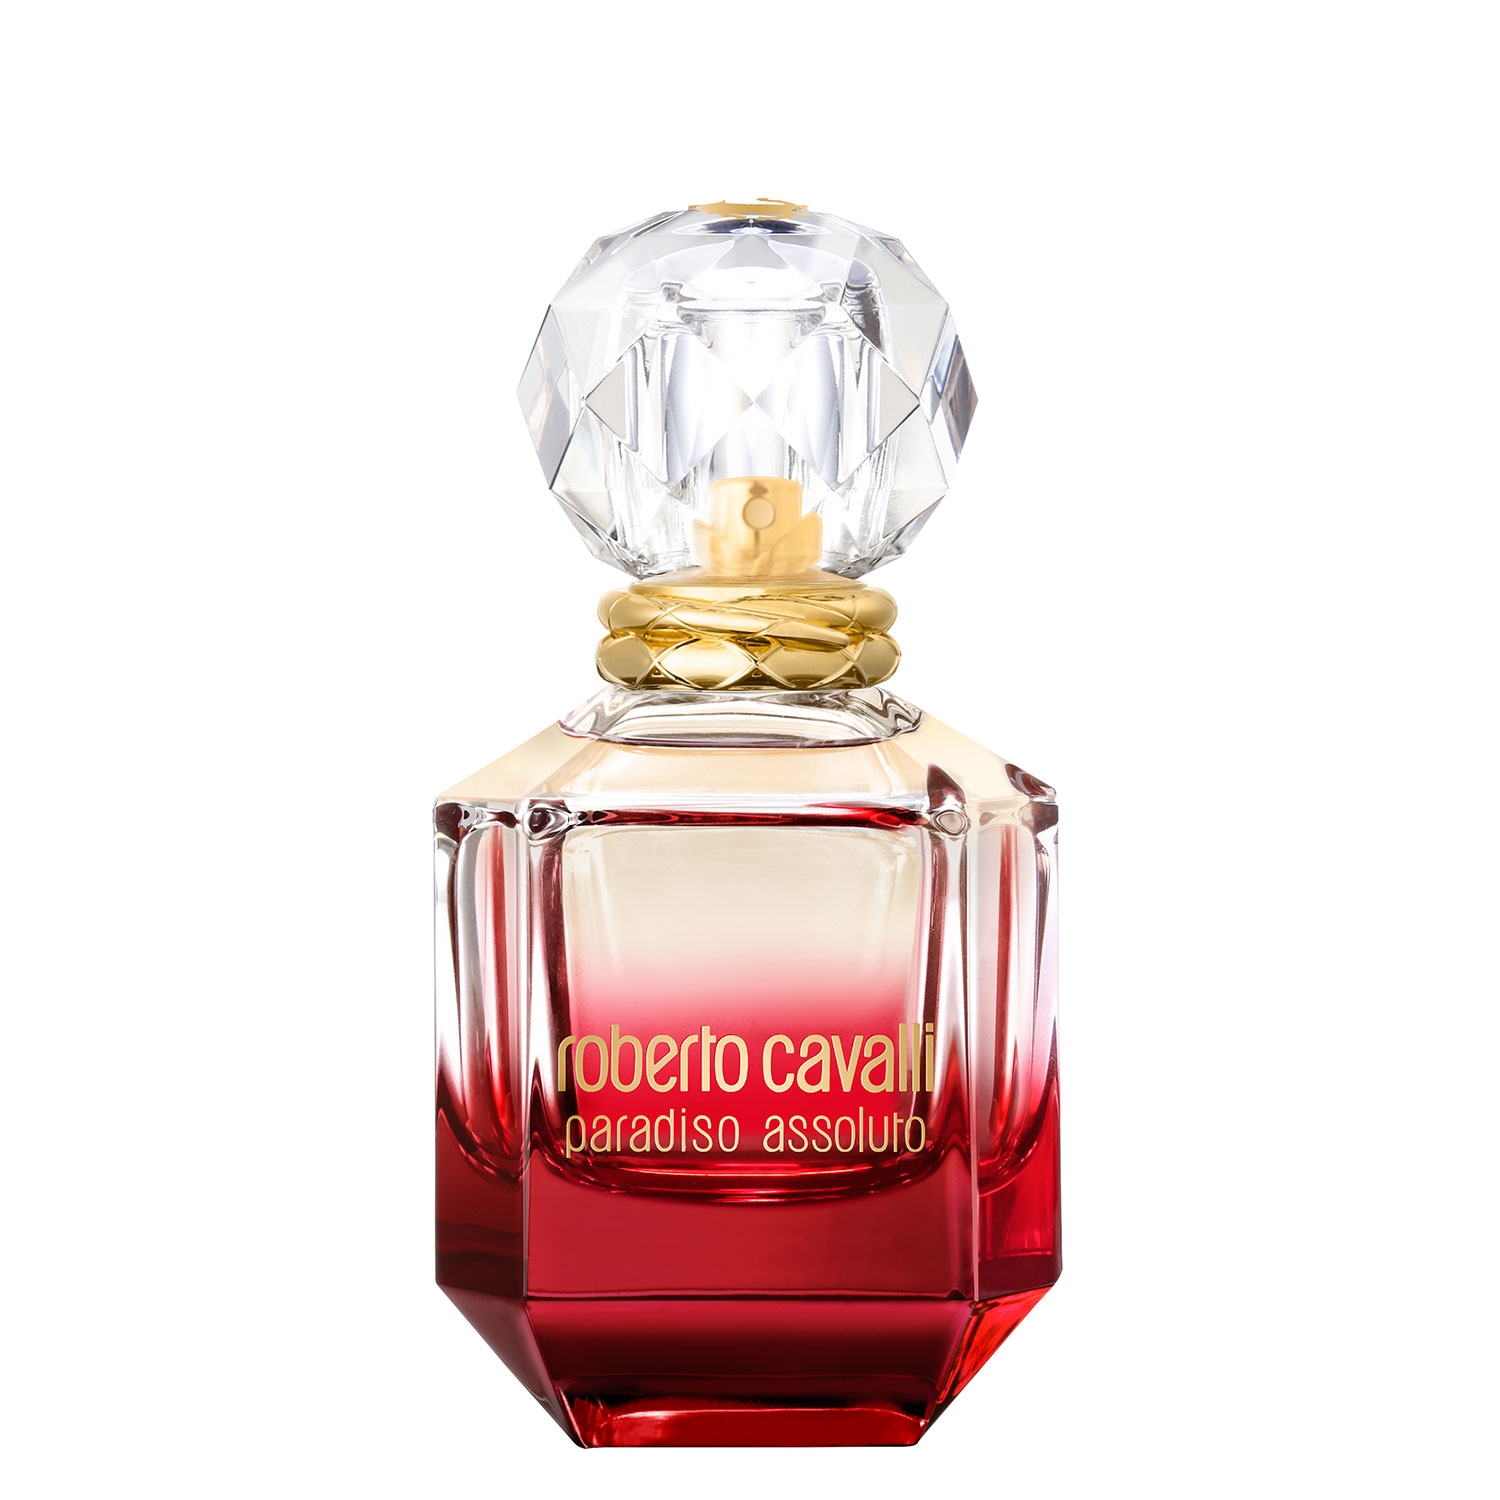 Produktbild von Paradiso - Assoluto Eau de Parfum